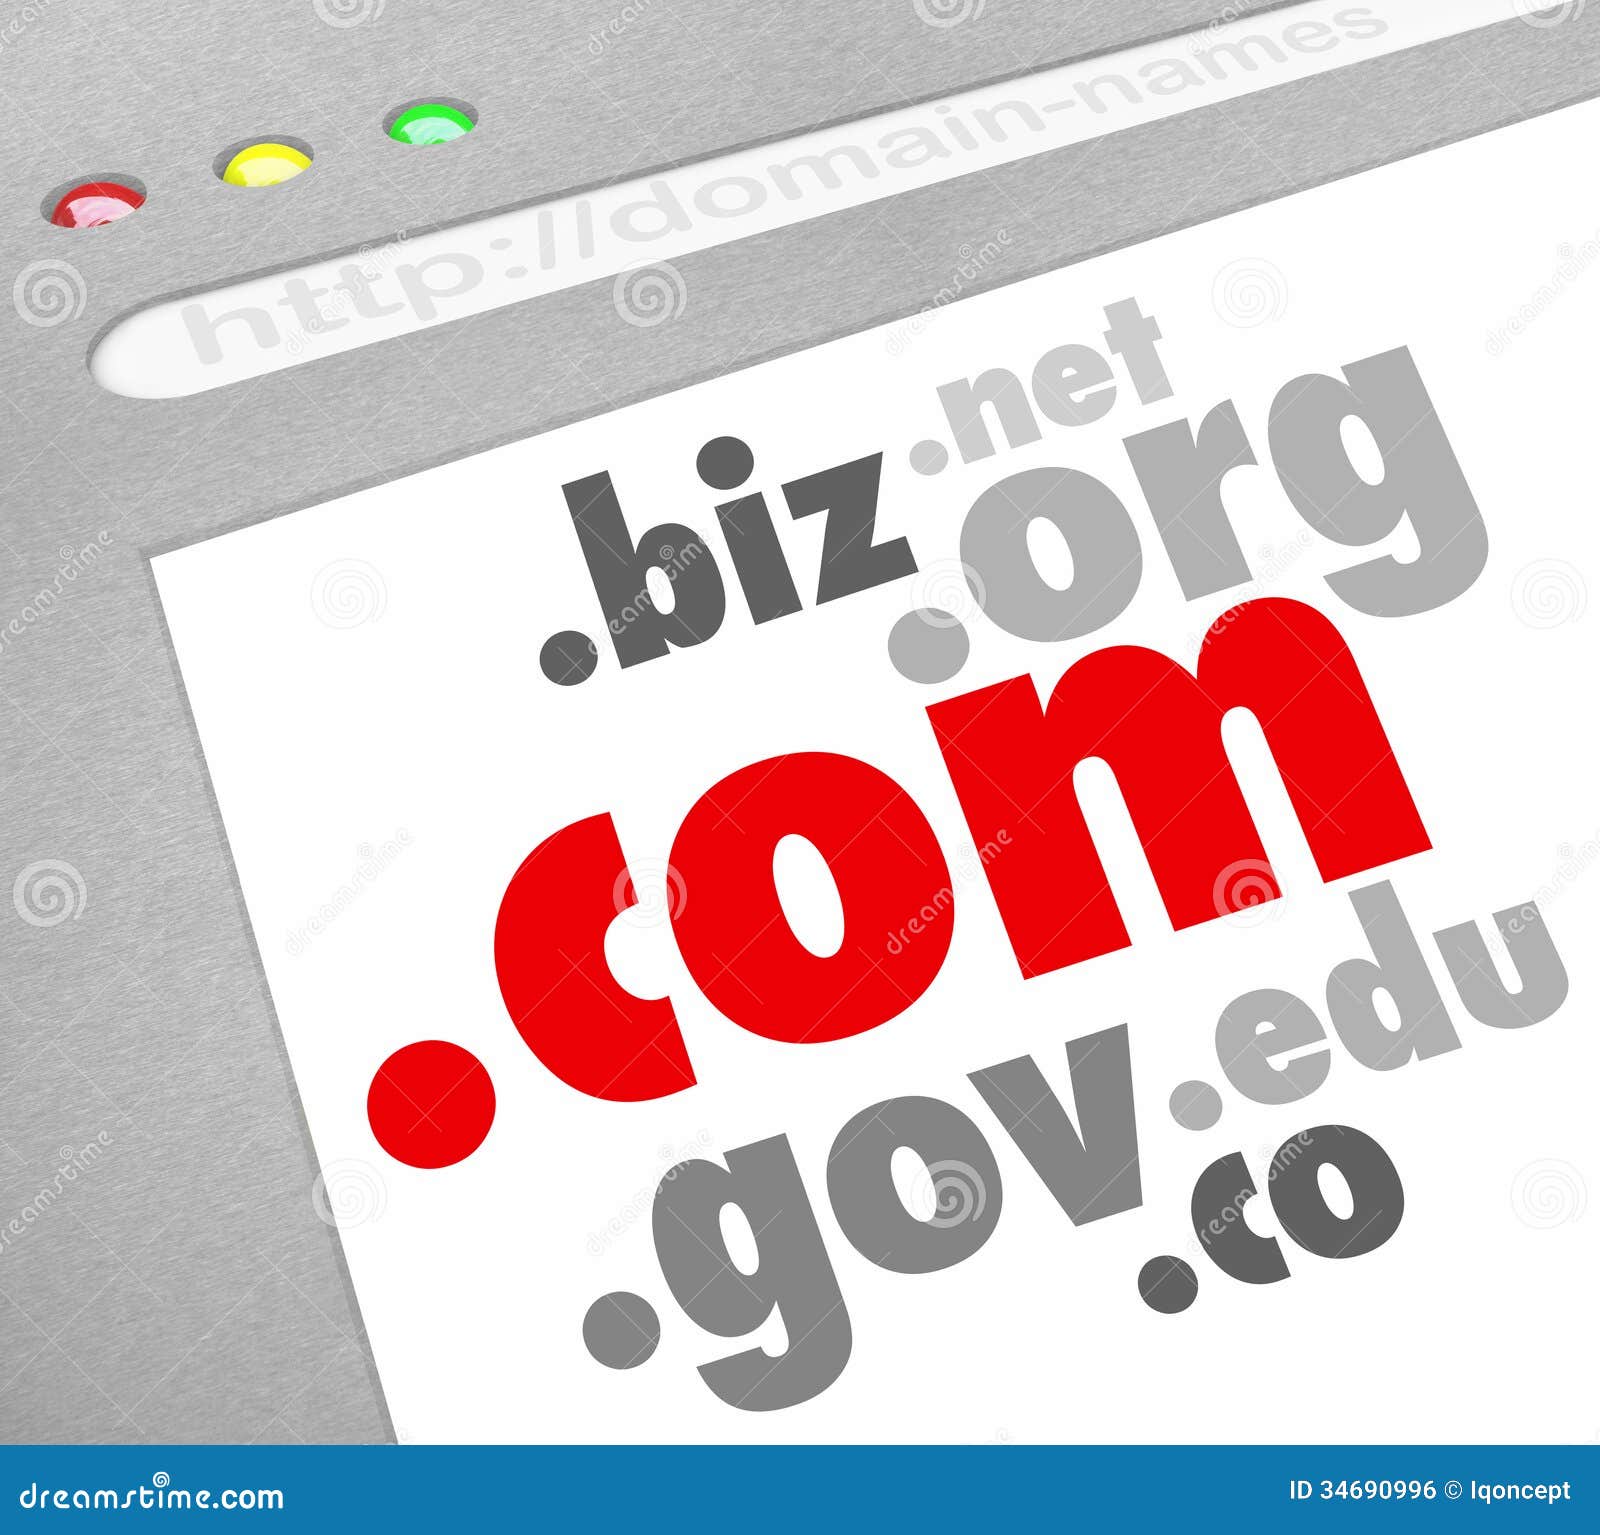 dot-com domain name suffixes website registration